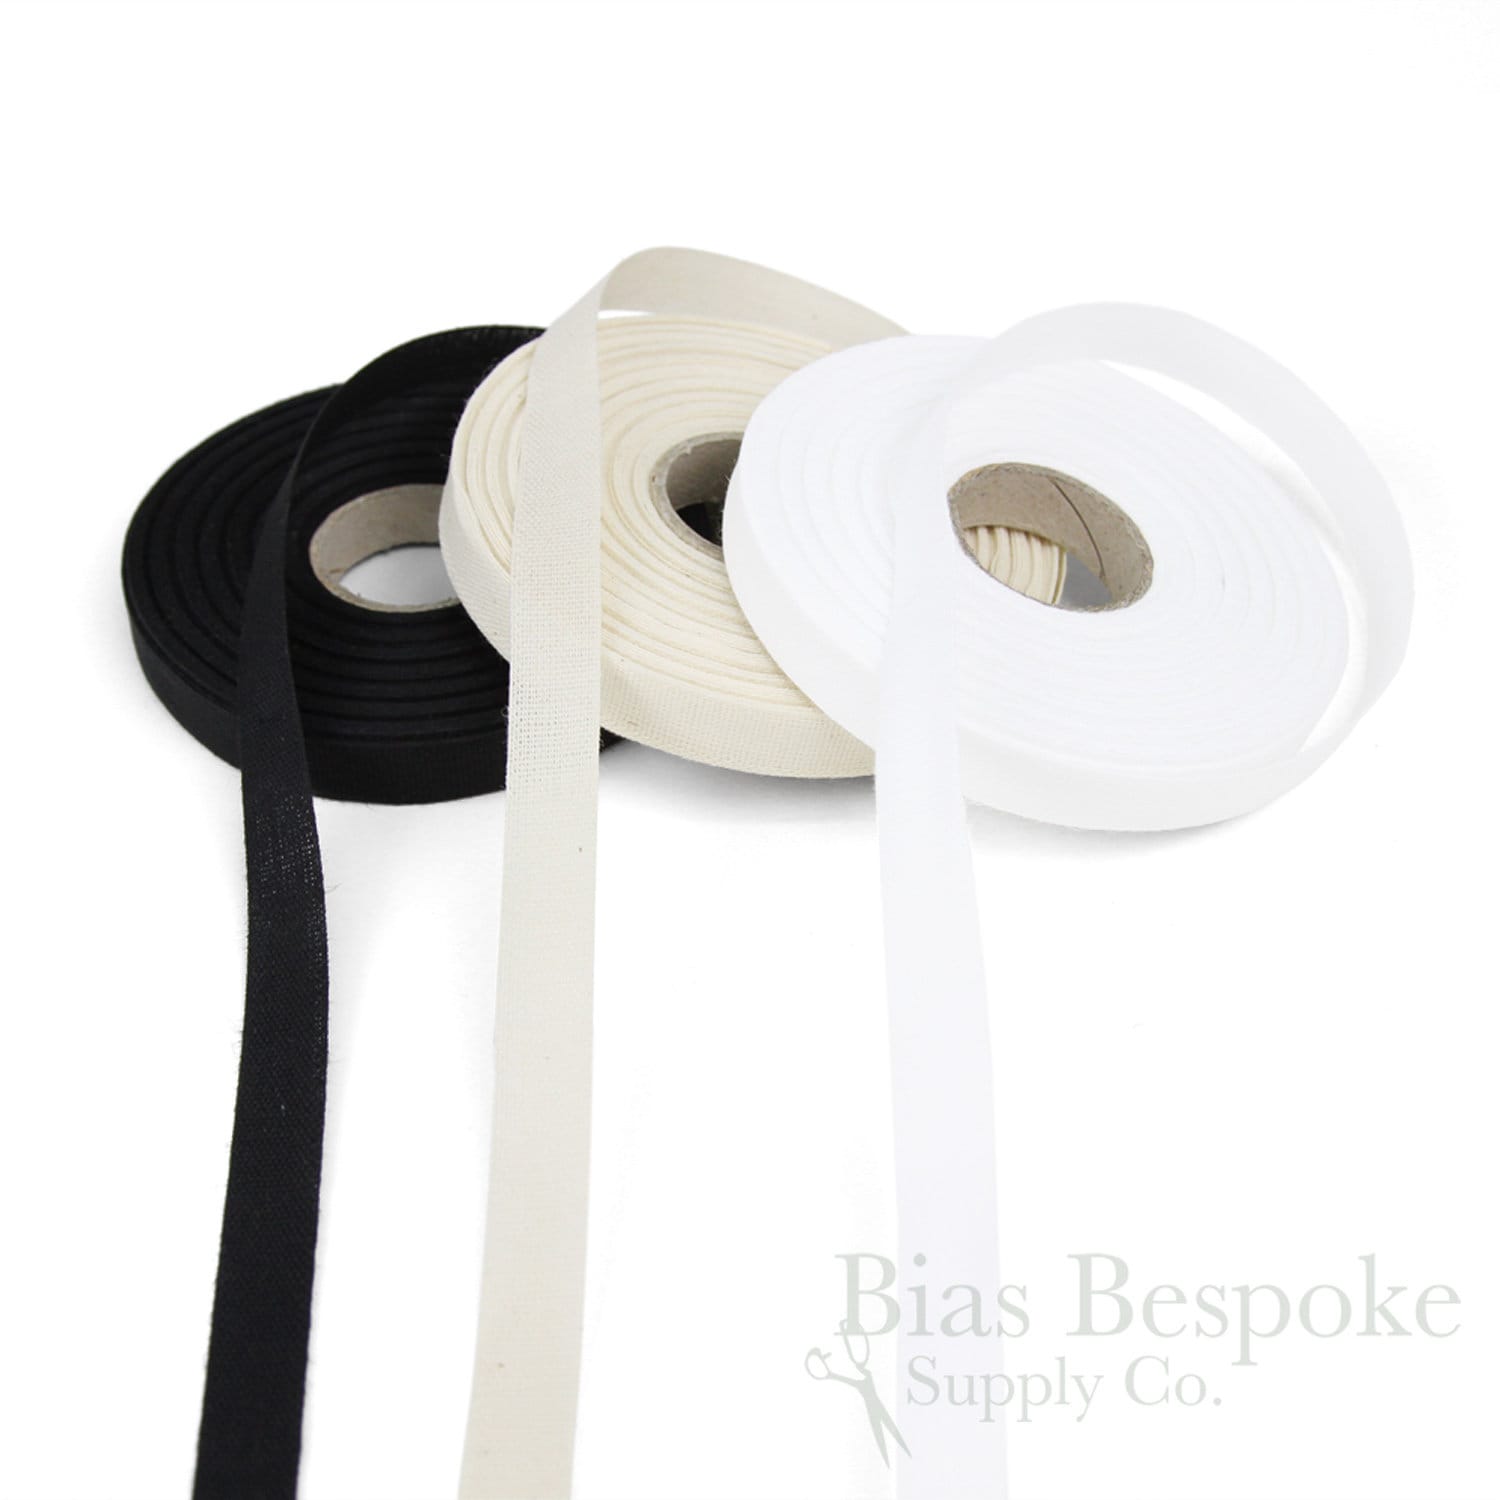 Sewn and braided utility rope/tape, white string fibers around